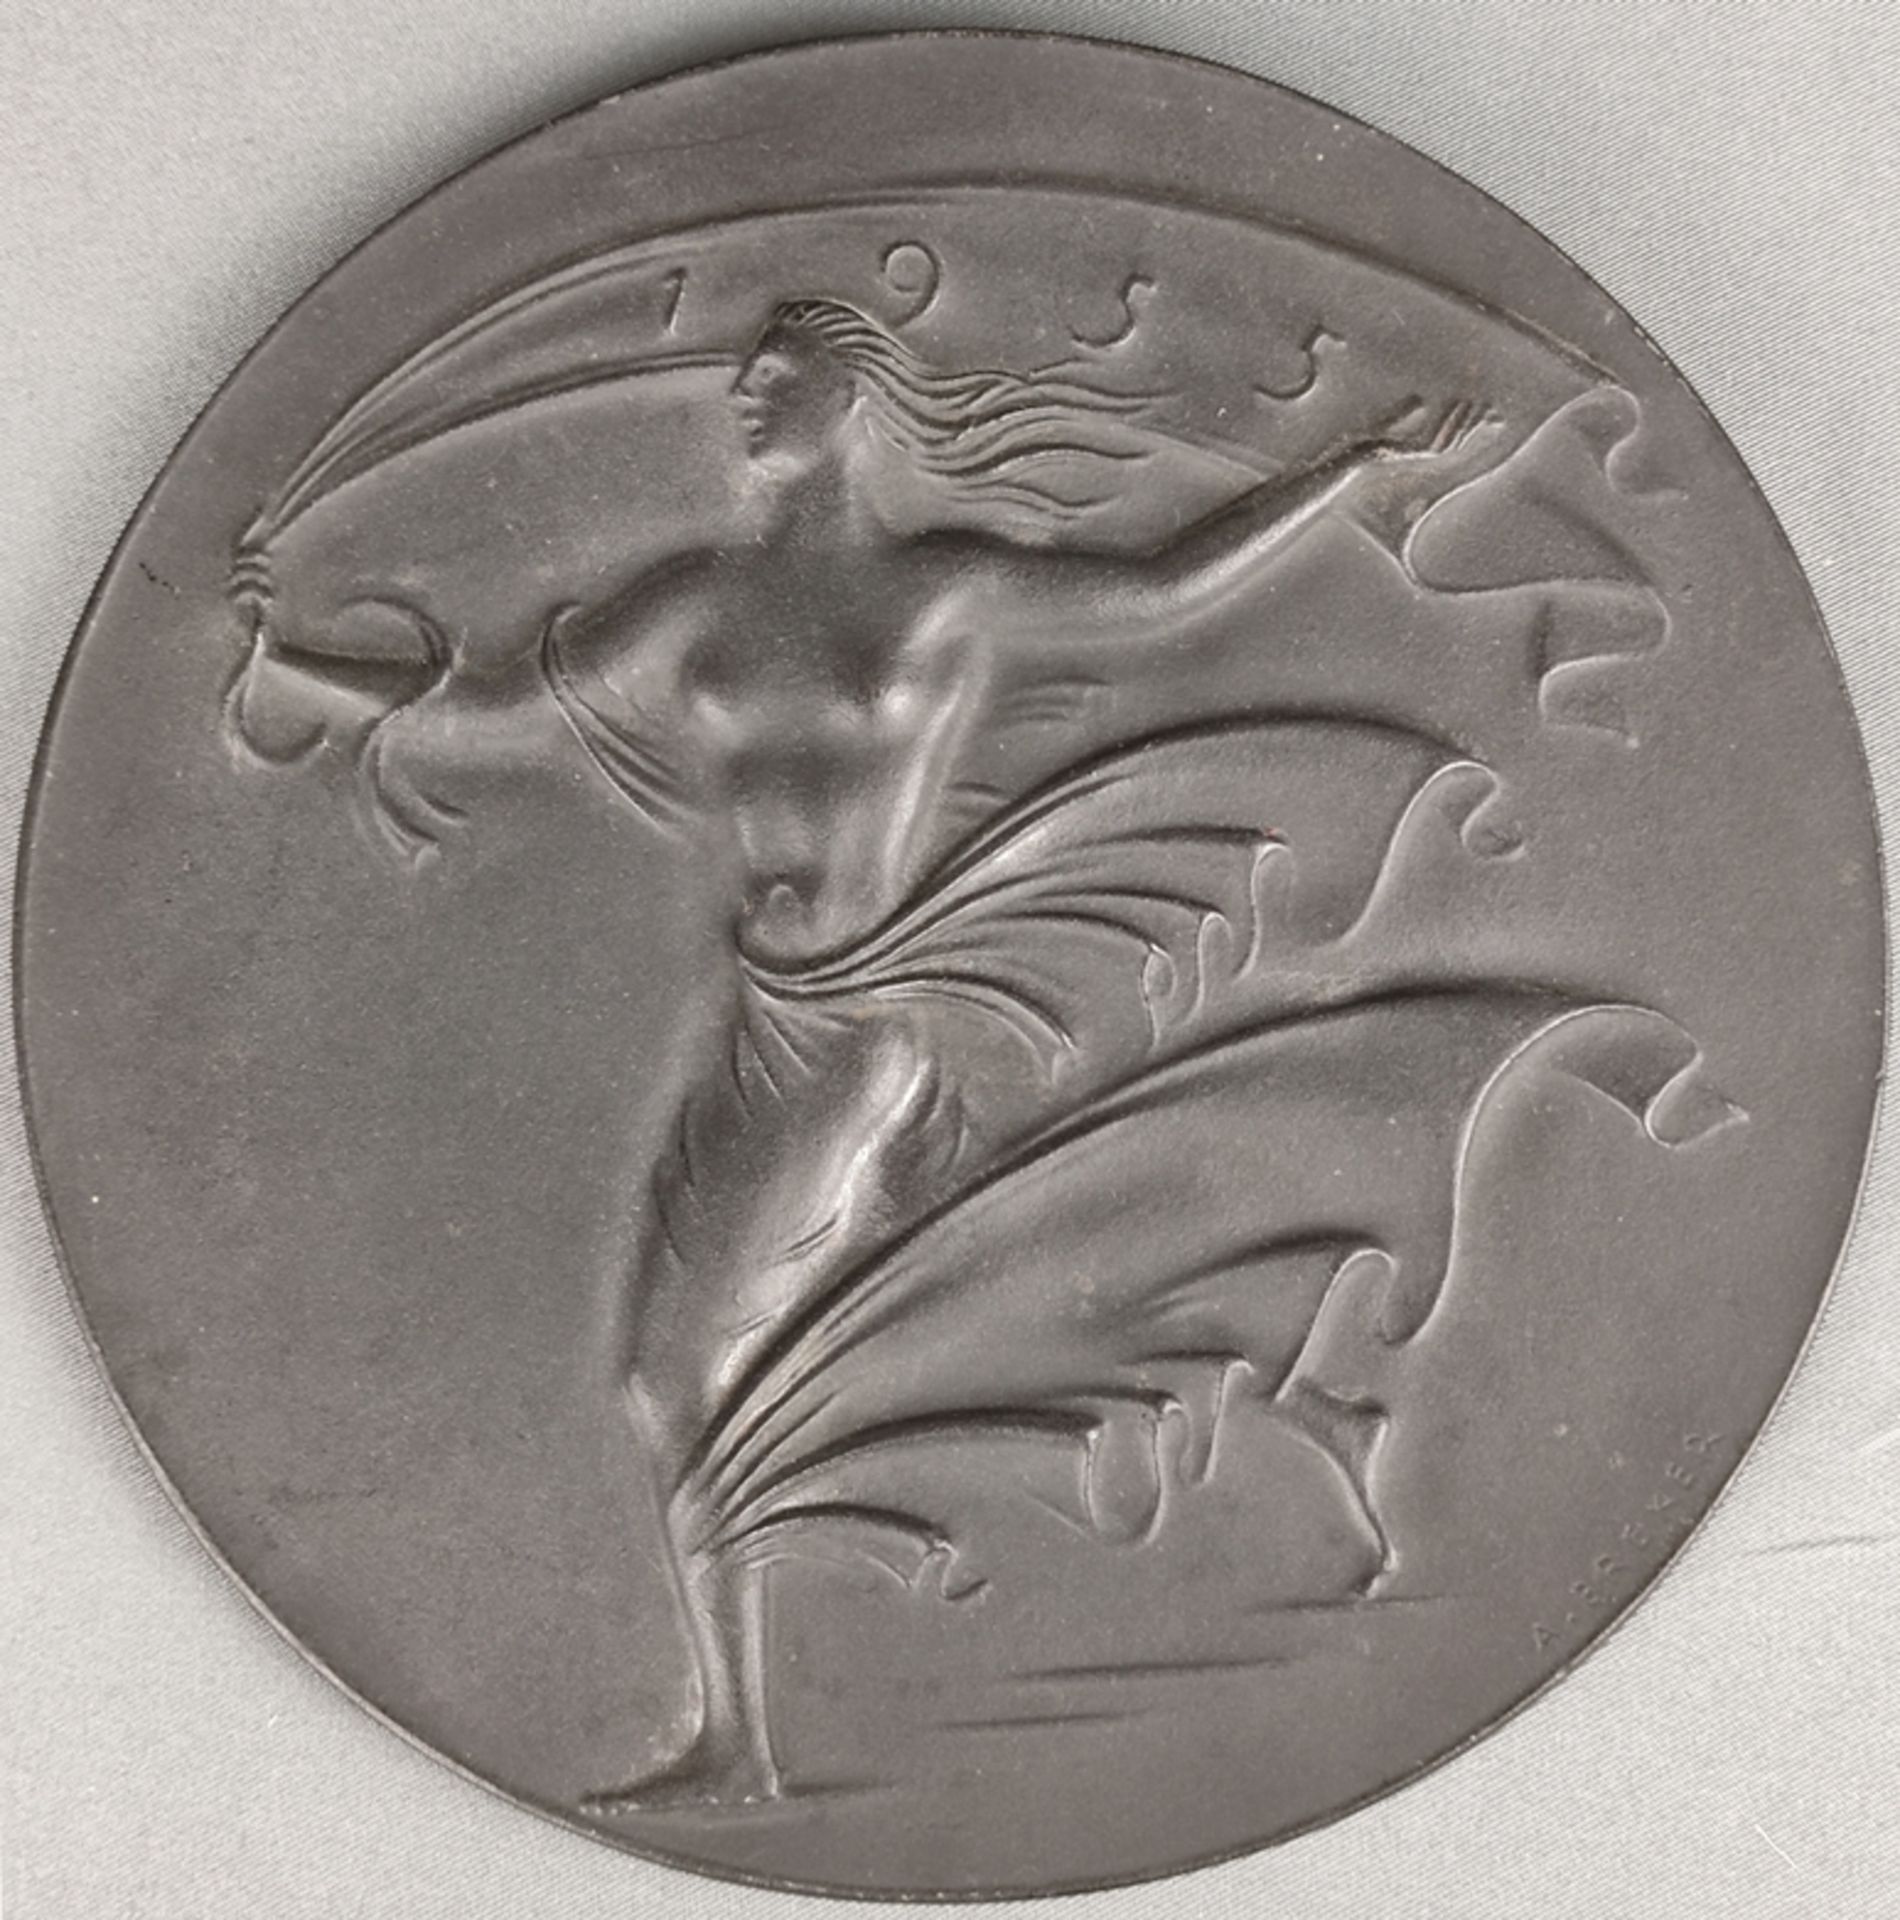 Breker, Arno (1900 Elberfeld - 1991 Düsseldorf) "Dancing Nymph", 1955, relief plaque, iron casting,